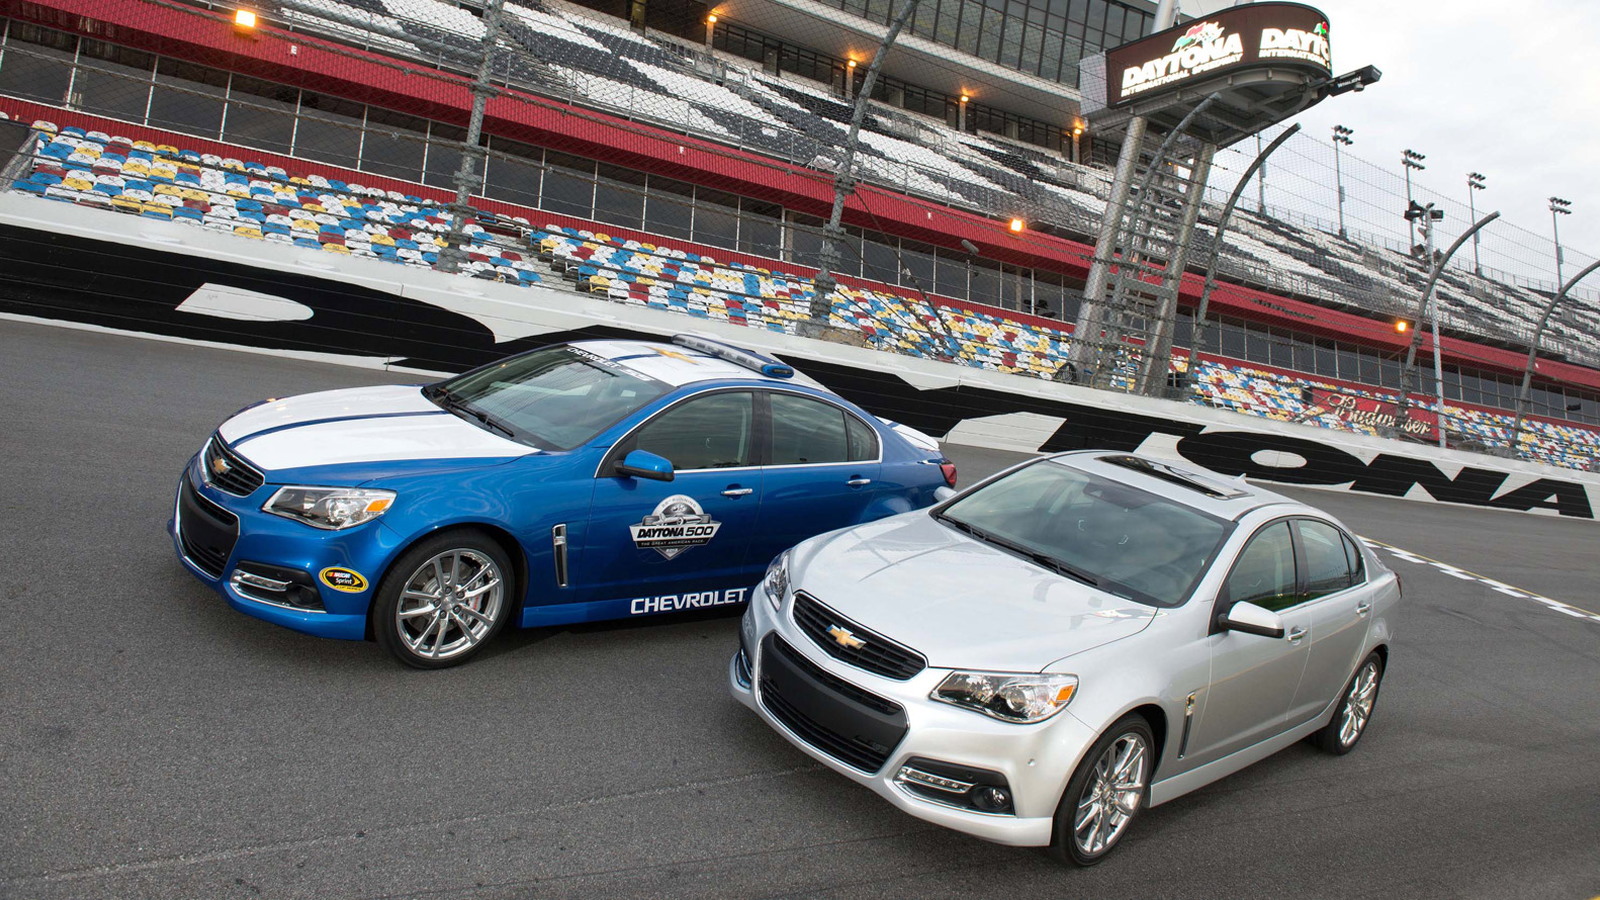 2014 Chevrolet SS at its debut at the Daytona International Speedway